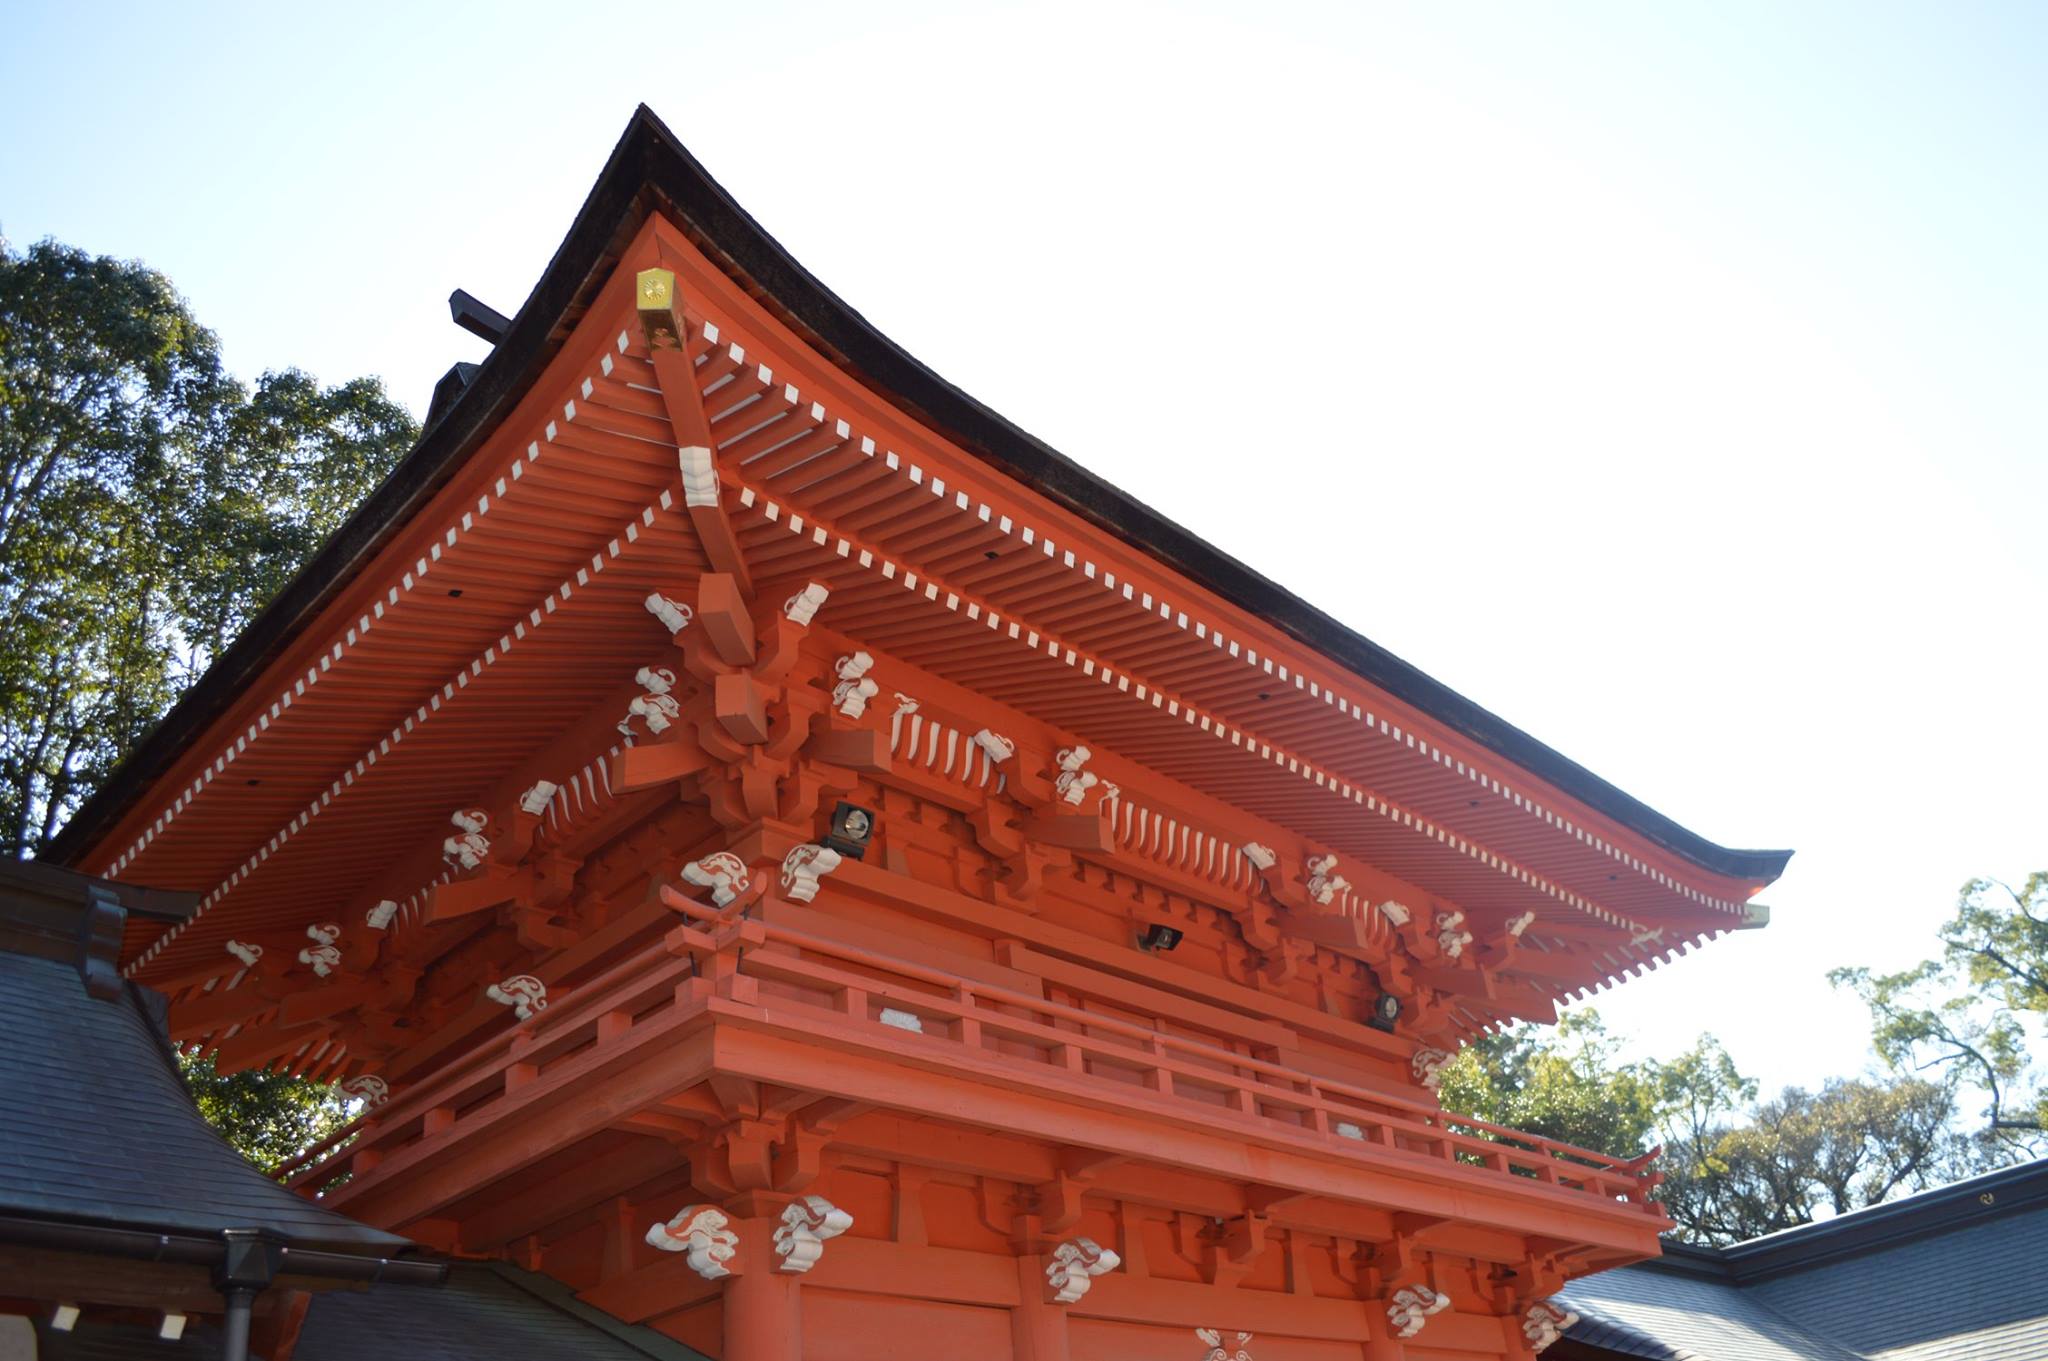 Nagato Ichinomiya Sumiyoshi-jinja Shrine (Shimonoseki Sightseeing Information)